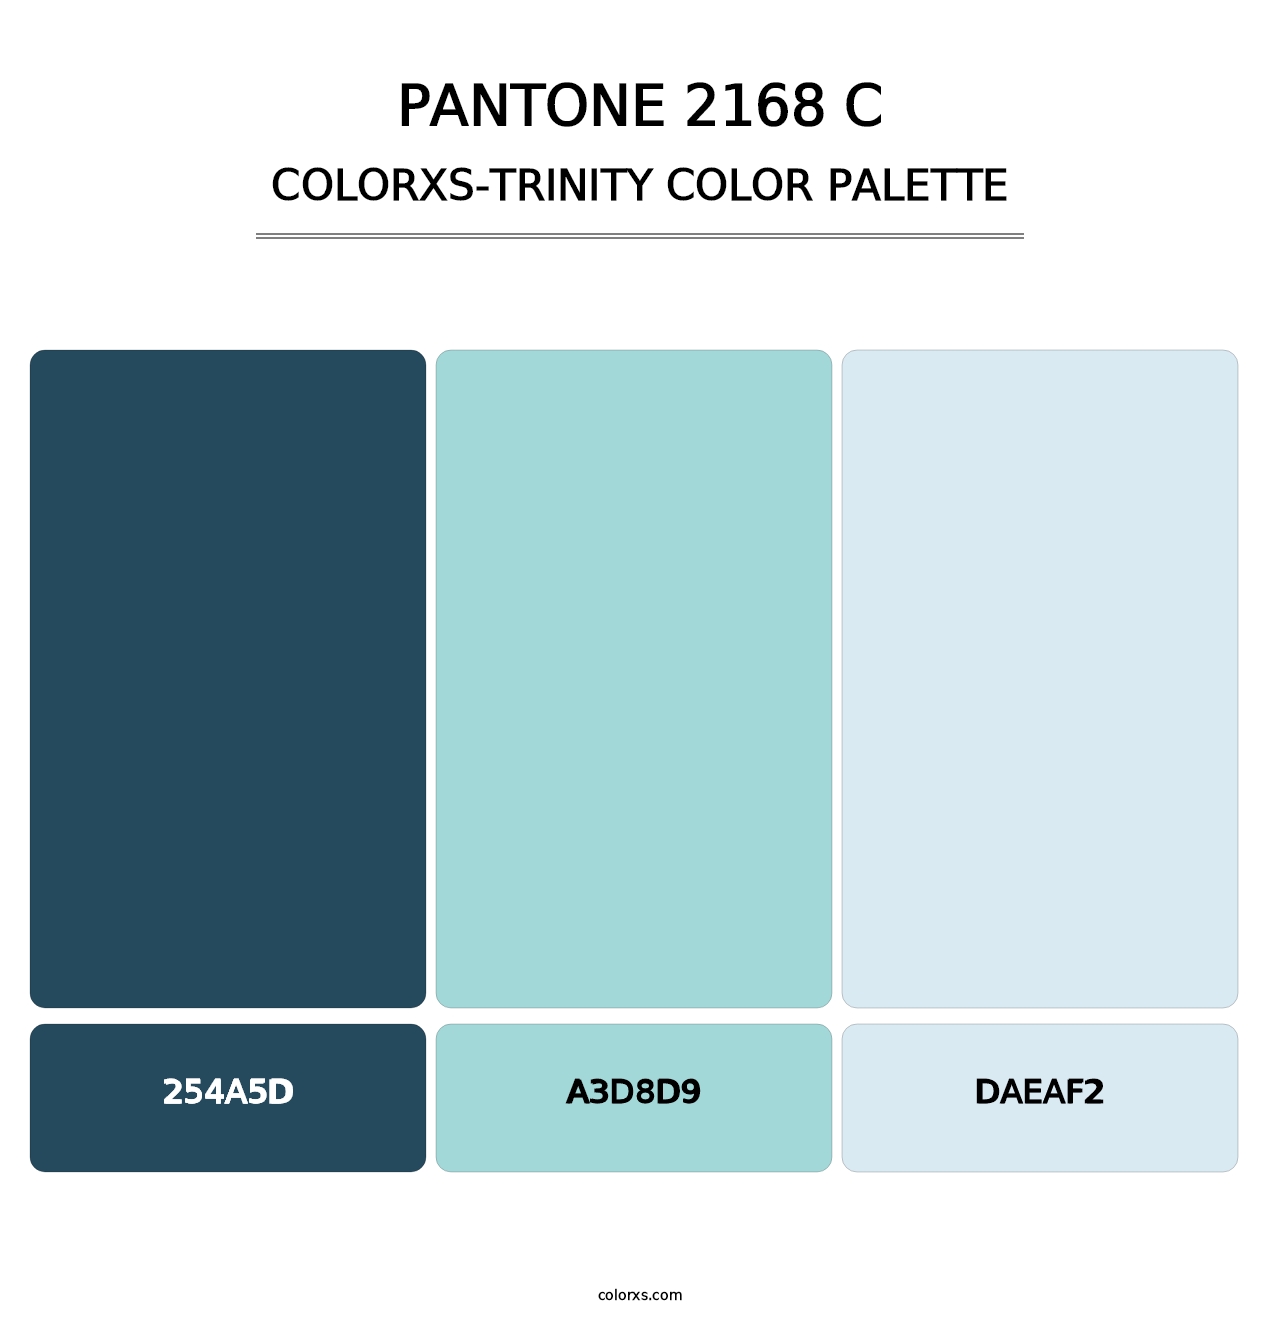 PANTONE 2168 C - Colorxs Trinity Palette